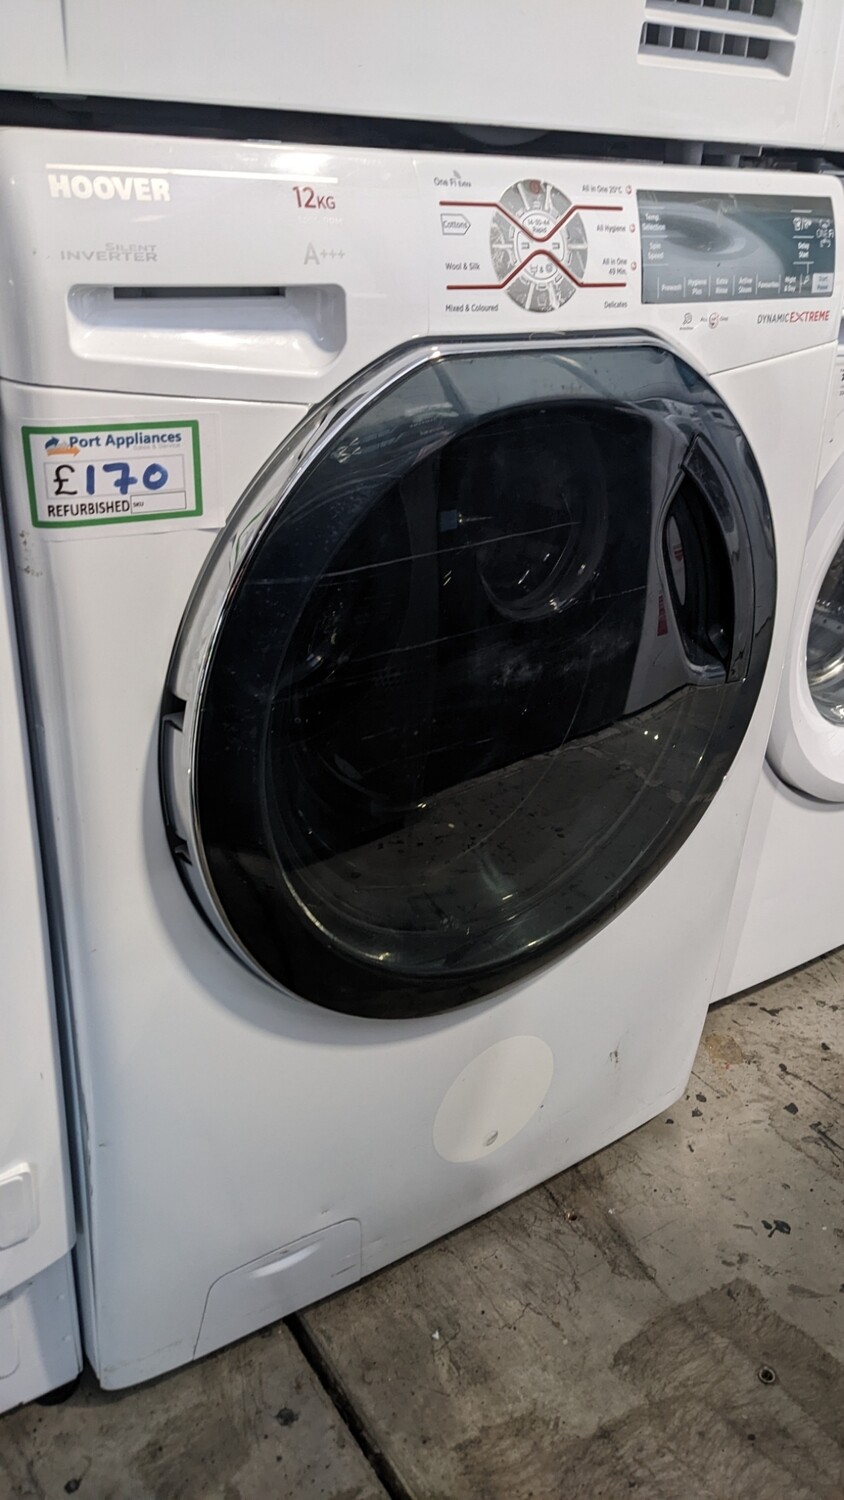 Hoover 12kg Load, 1400 Spin Washing Machine - White - Refurbished - 6 Month Guarantee